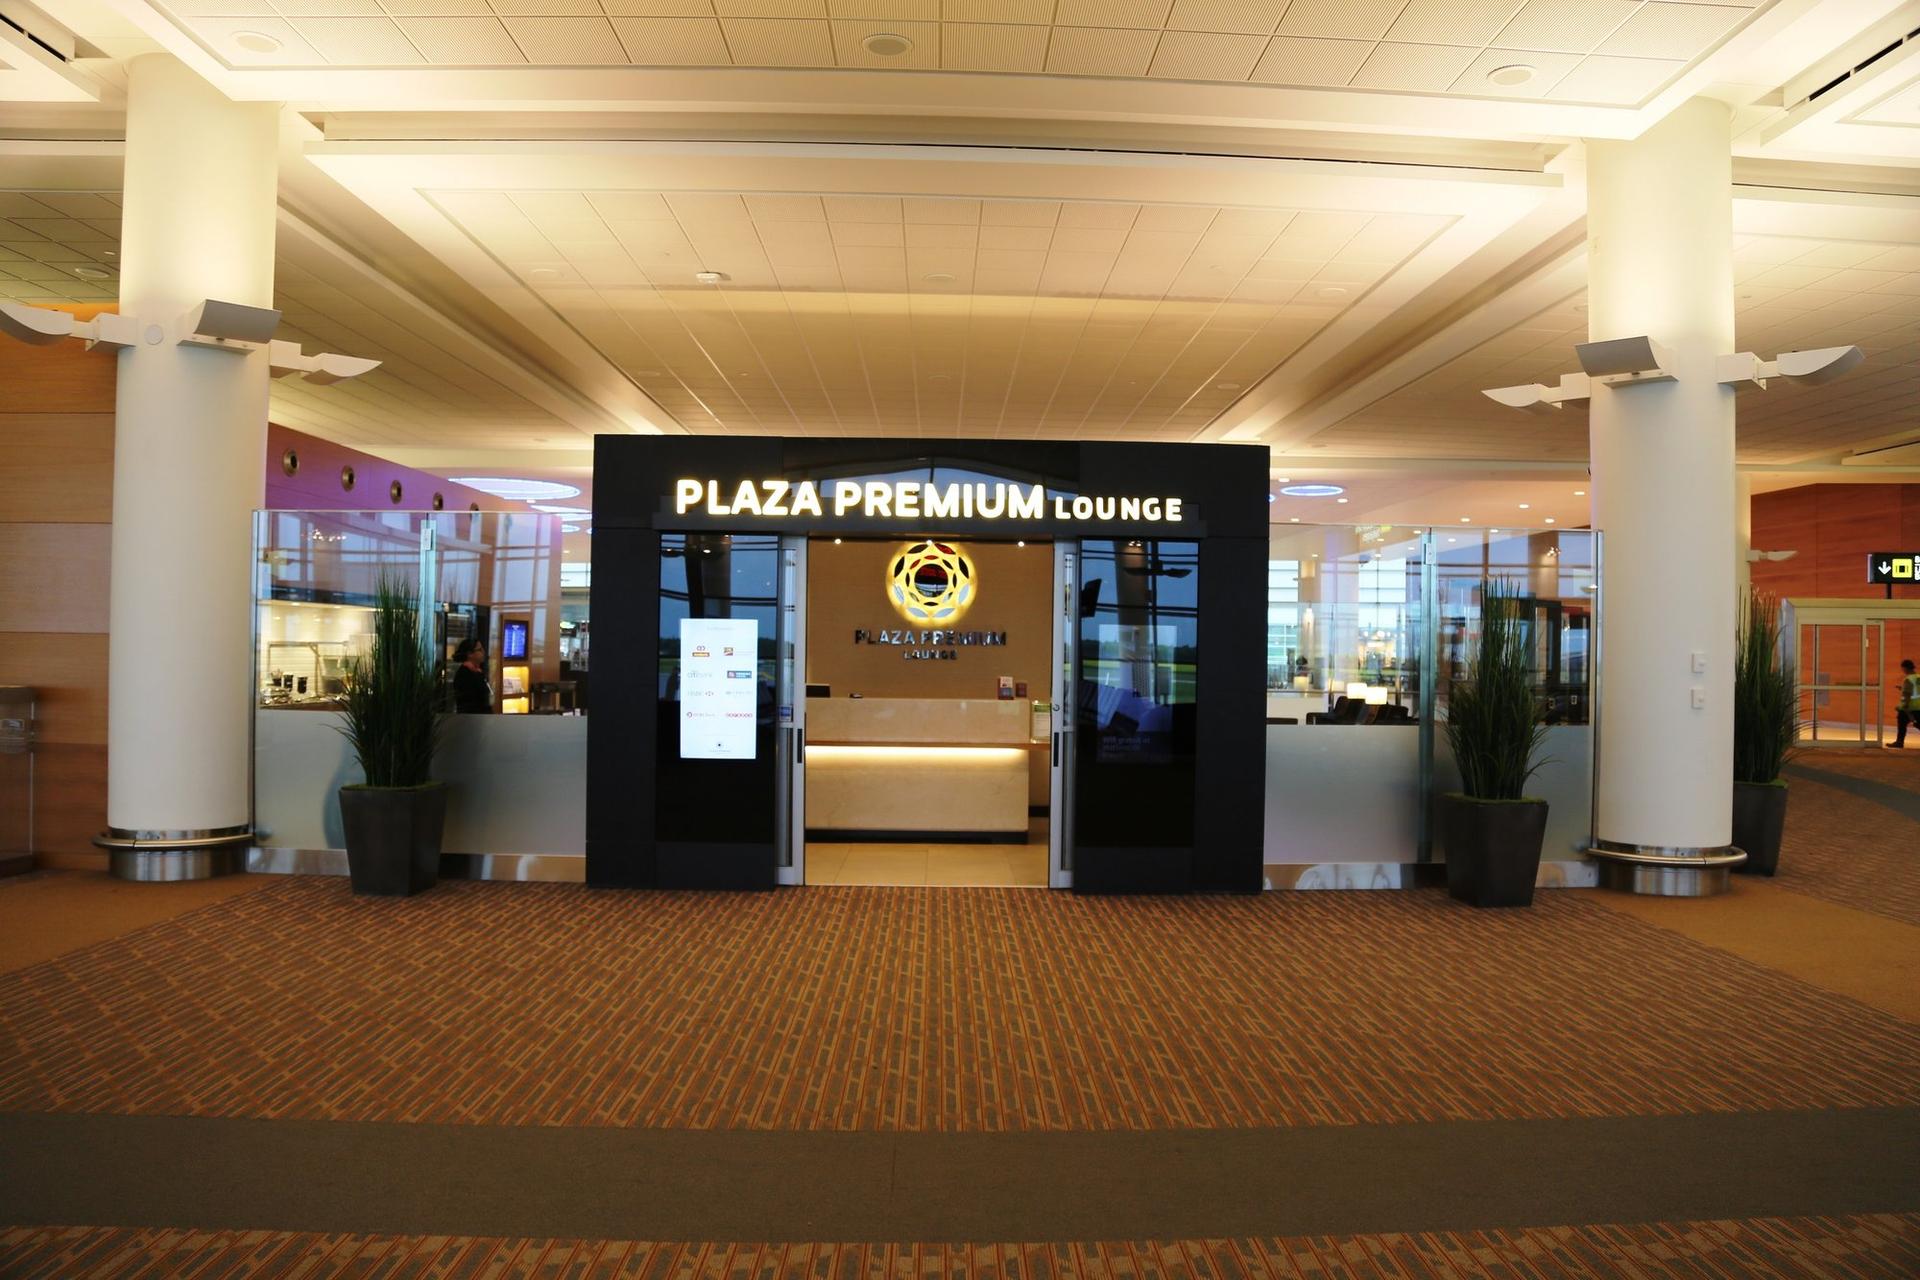 Plaza Premium Lounge image 34 of 45